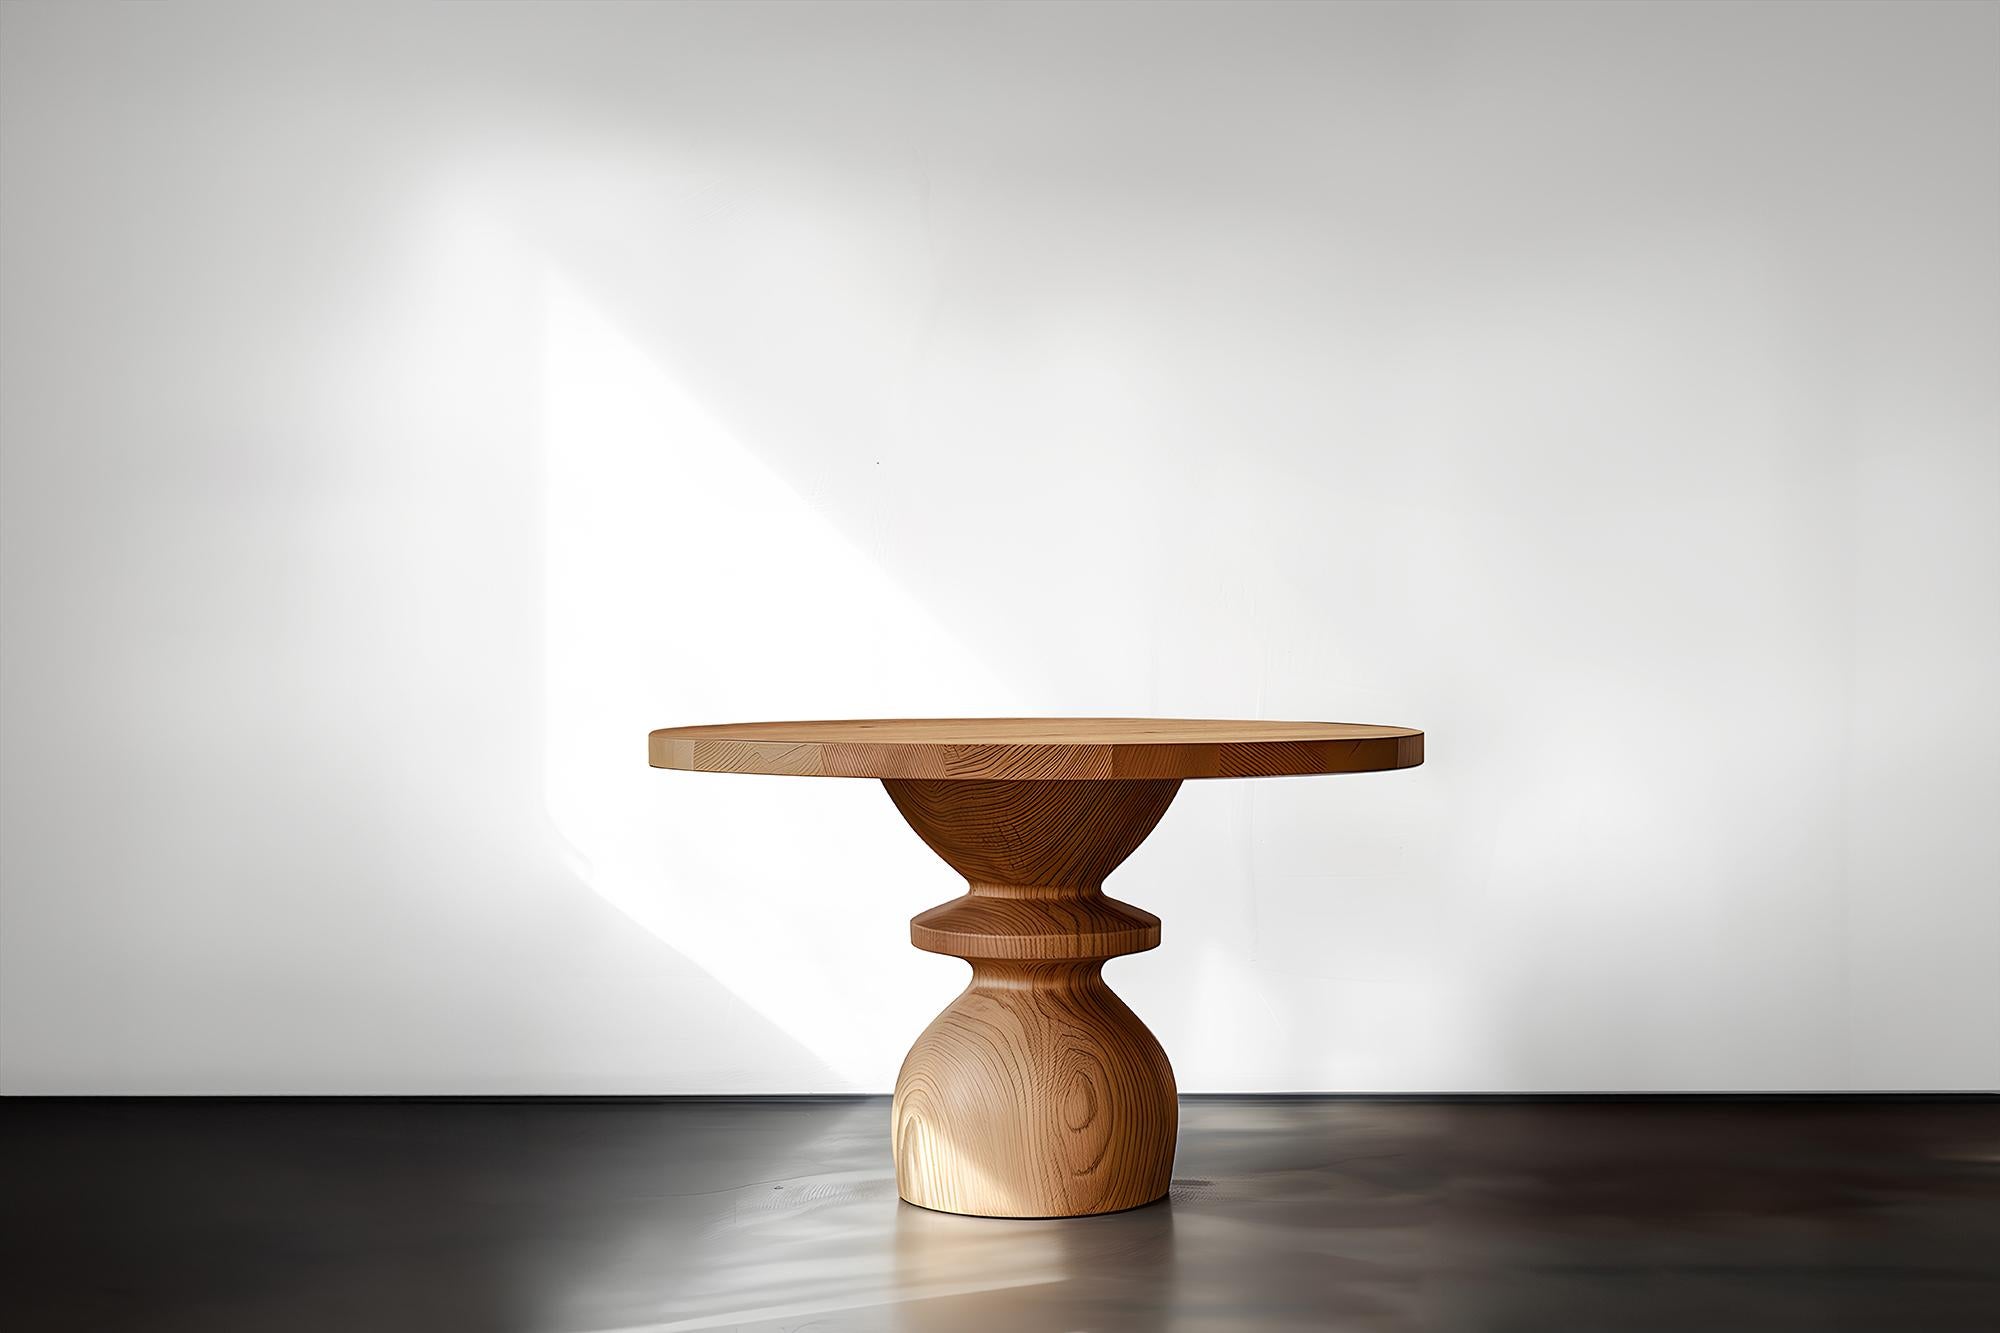 Tables à dessert Socle de Joel Escalona Designs, Sweet in Solid Wood No22

--

Voici la 